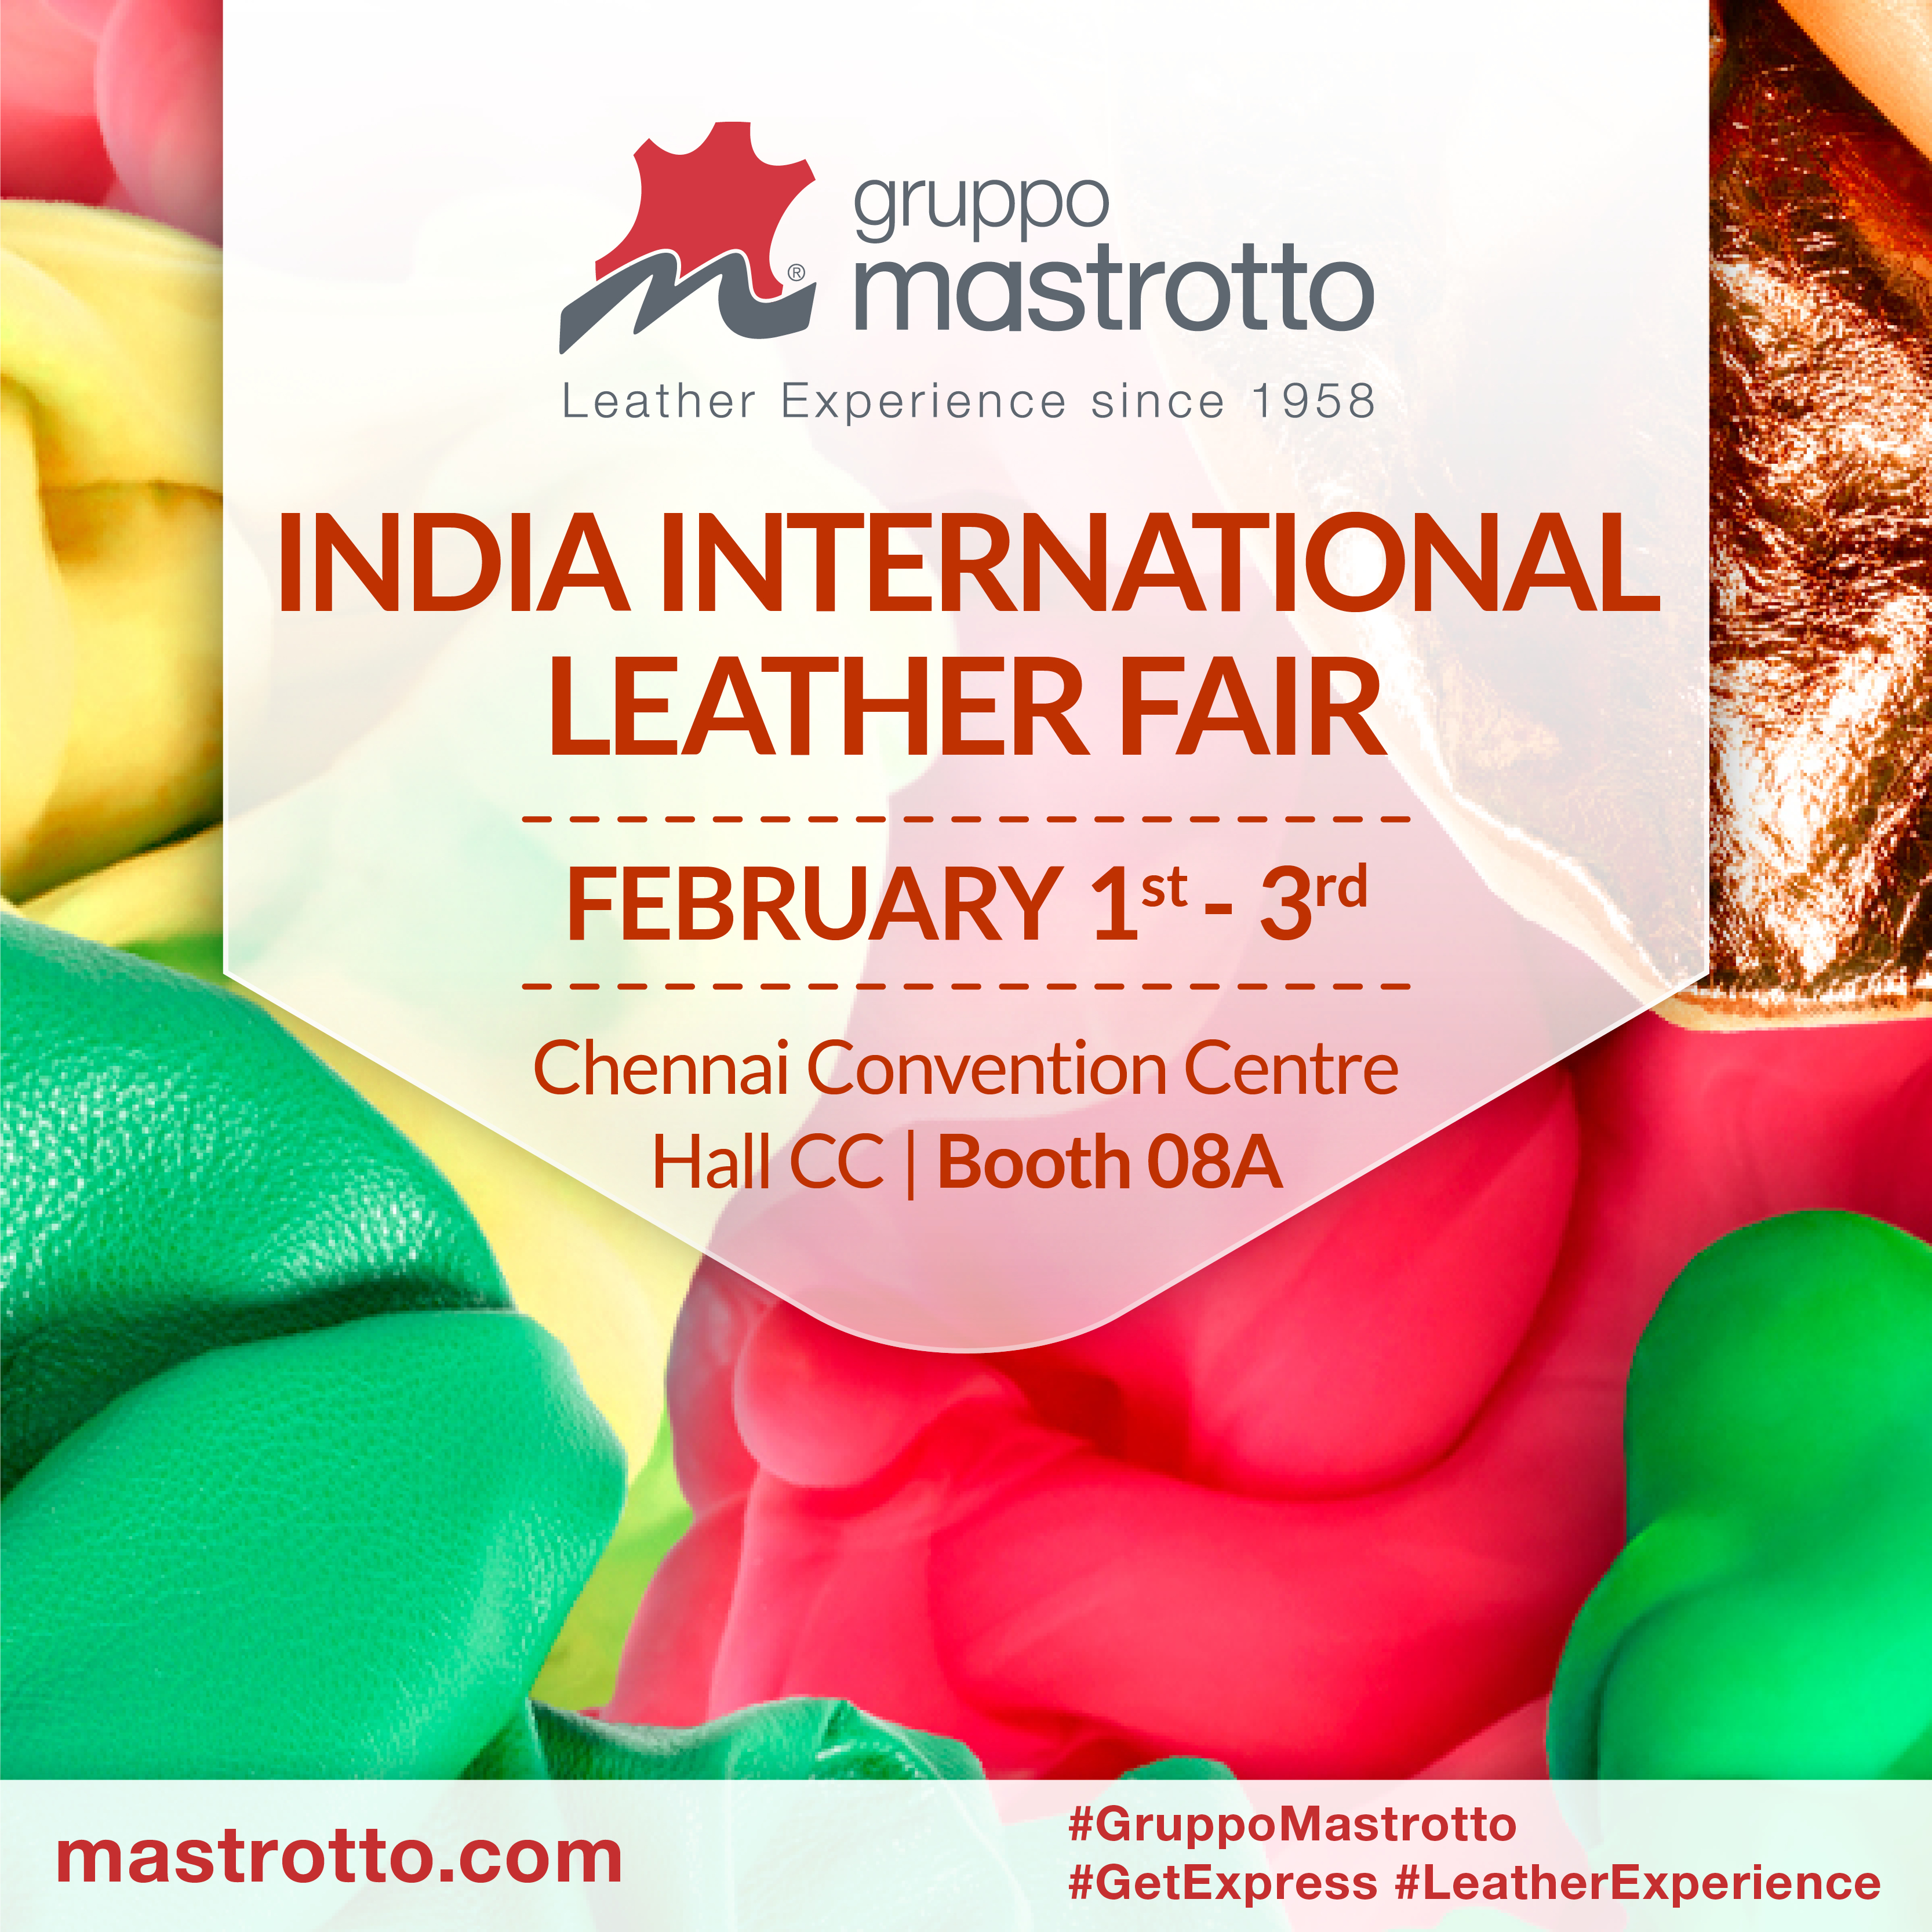 Gruppo Mastrotto India International Leather Fair 2018